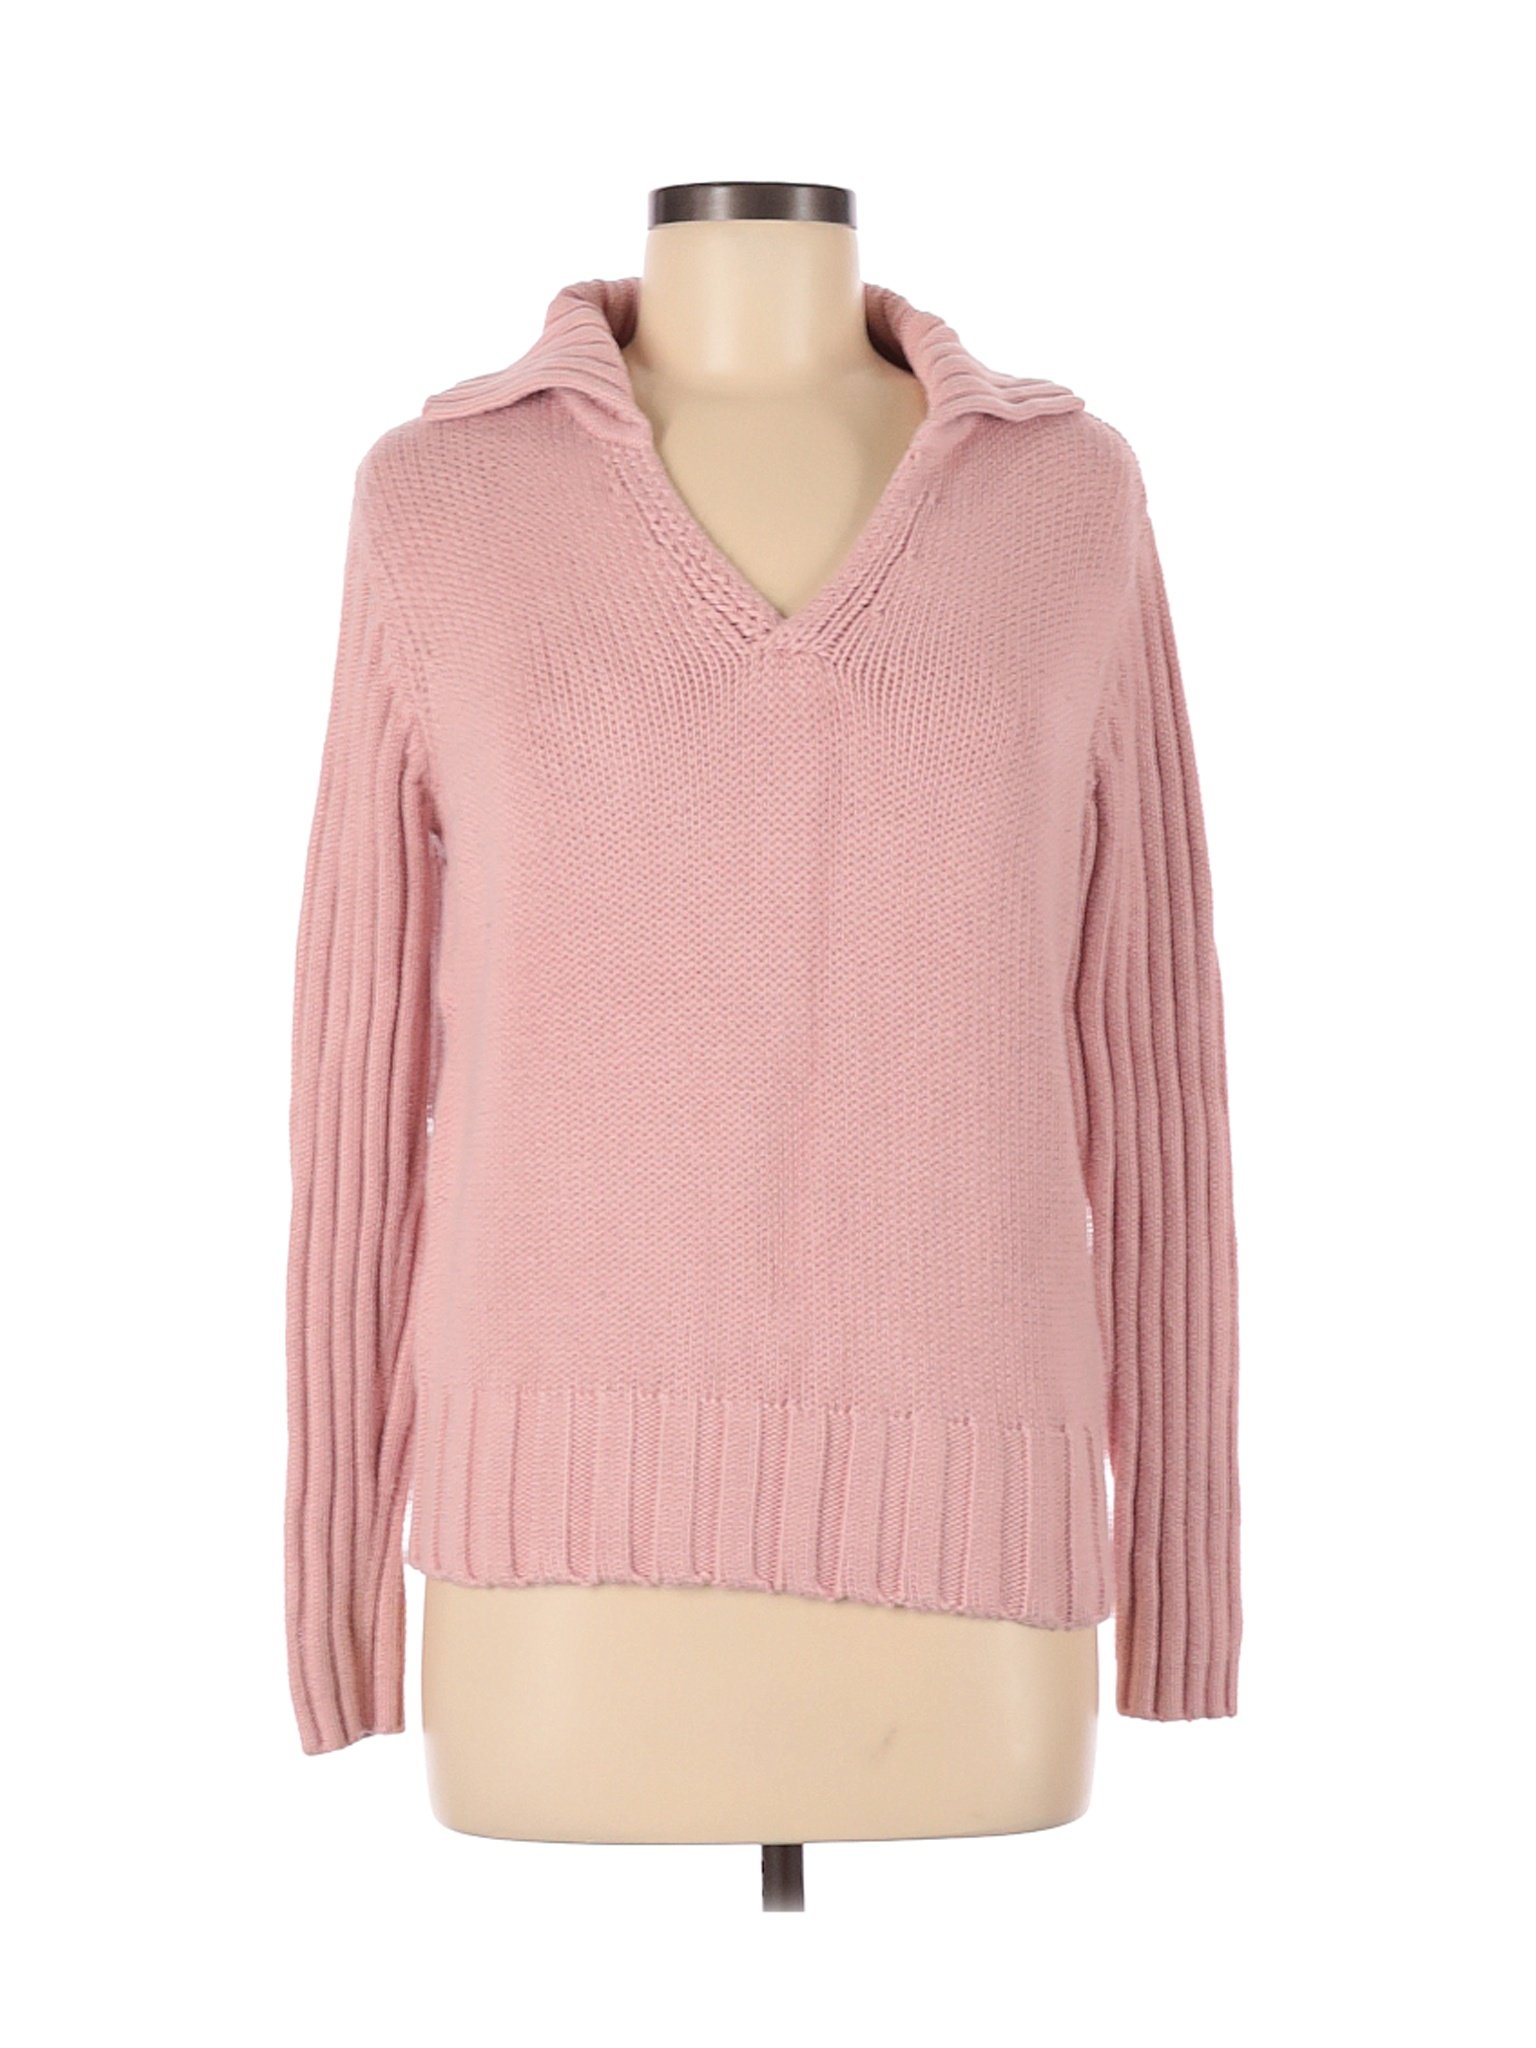 St. John's Bay Women Pink Pullover Sweater M | eBay